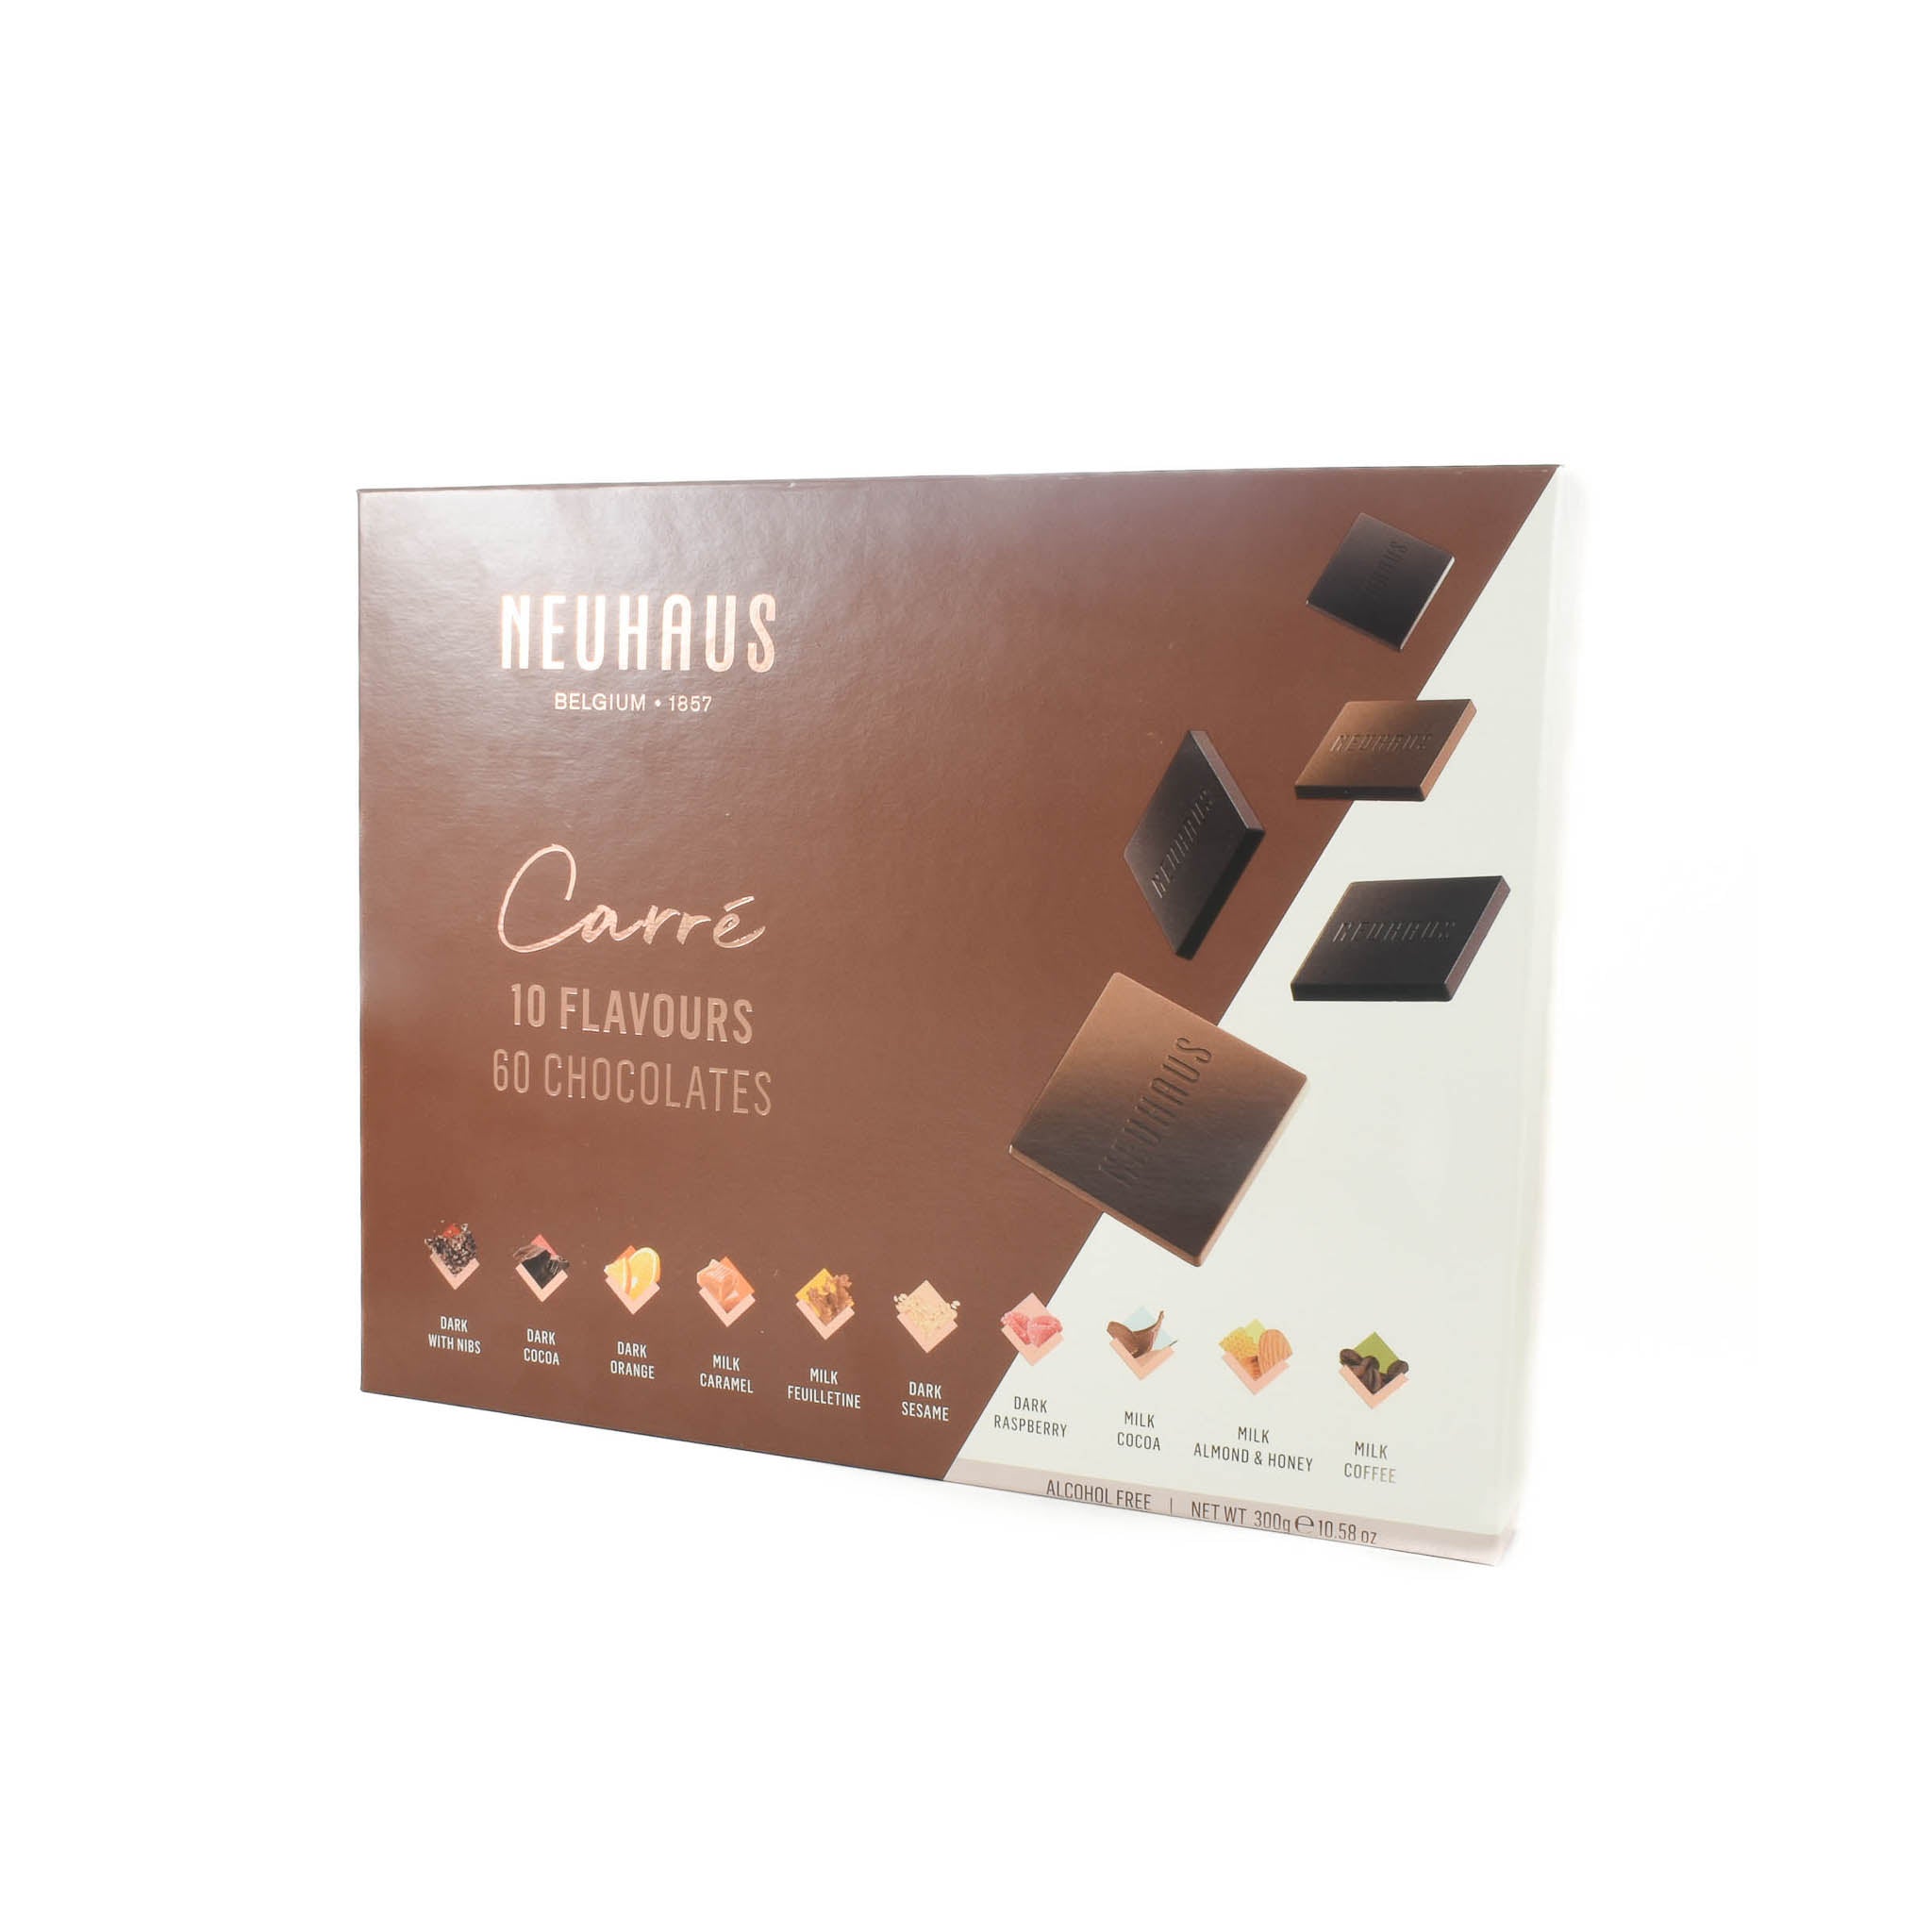 Neuhaus "Carre" 10 Flavour Chocolates - 60 Pieces